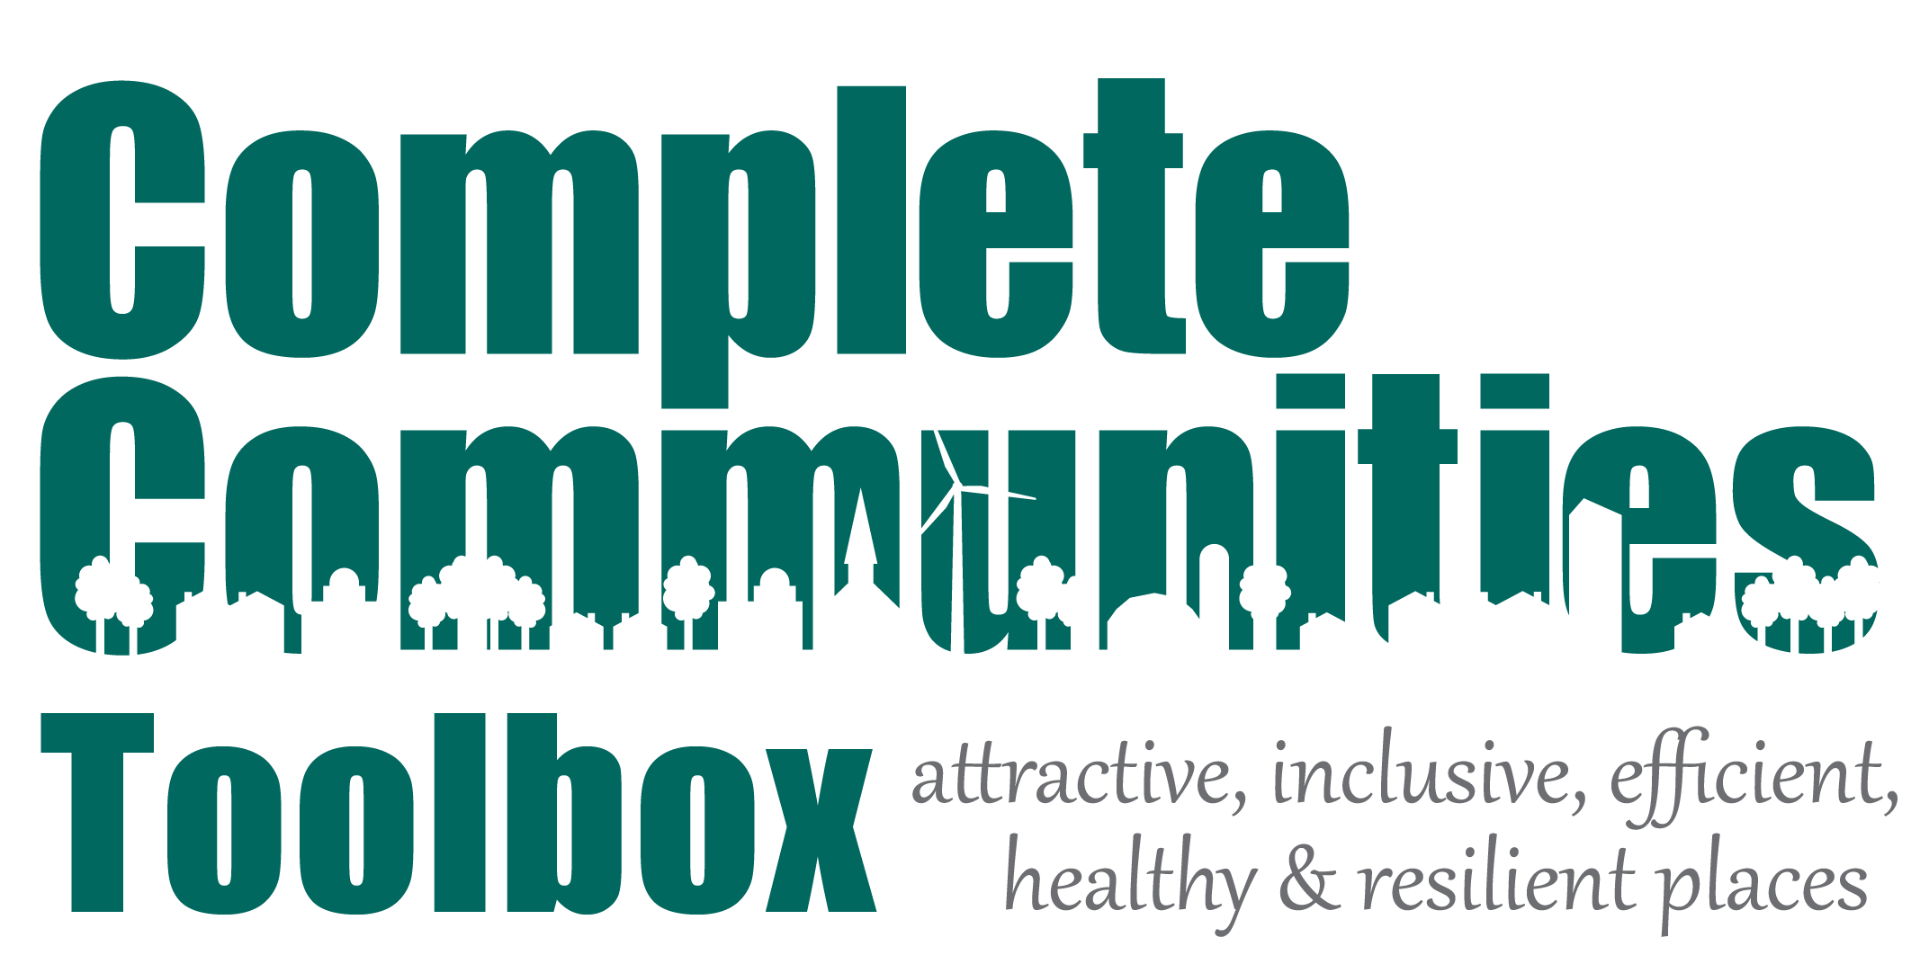 Planning for Complete Communities in Delaware